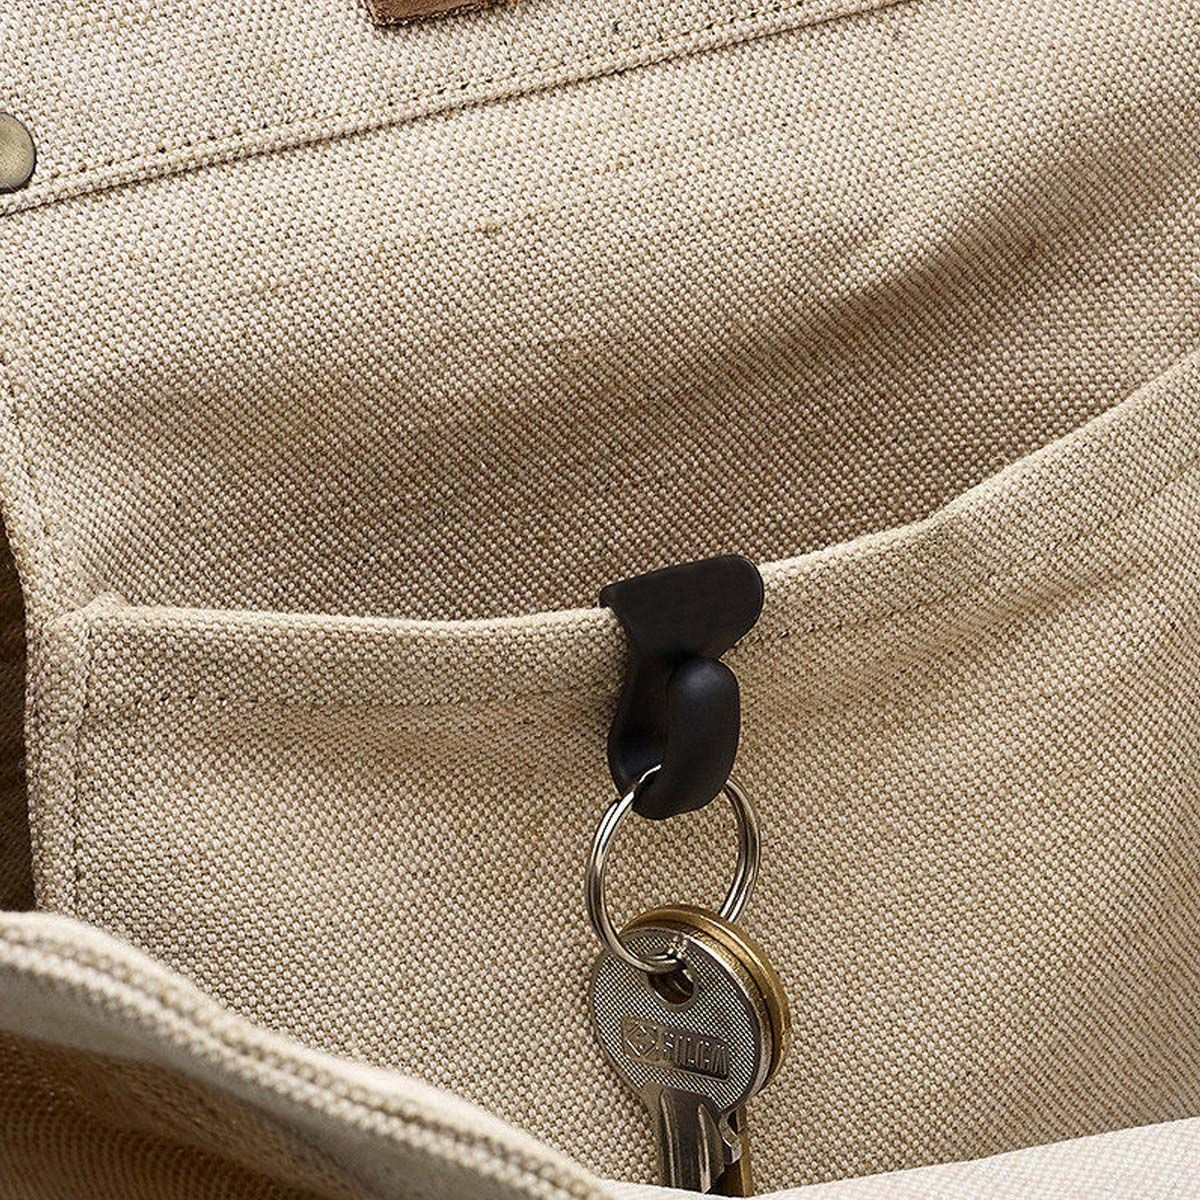 Petite pochette - Sac pour sac à main - sac à clés